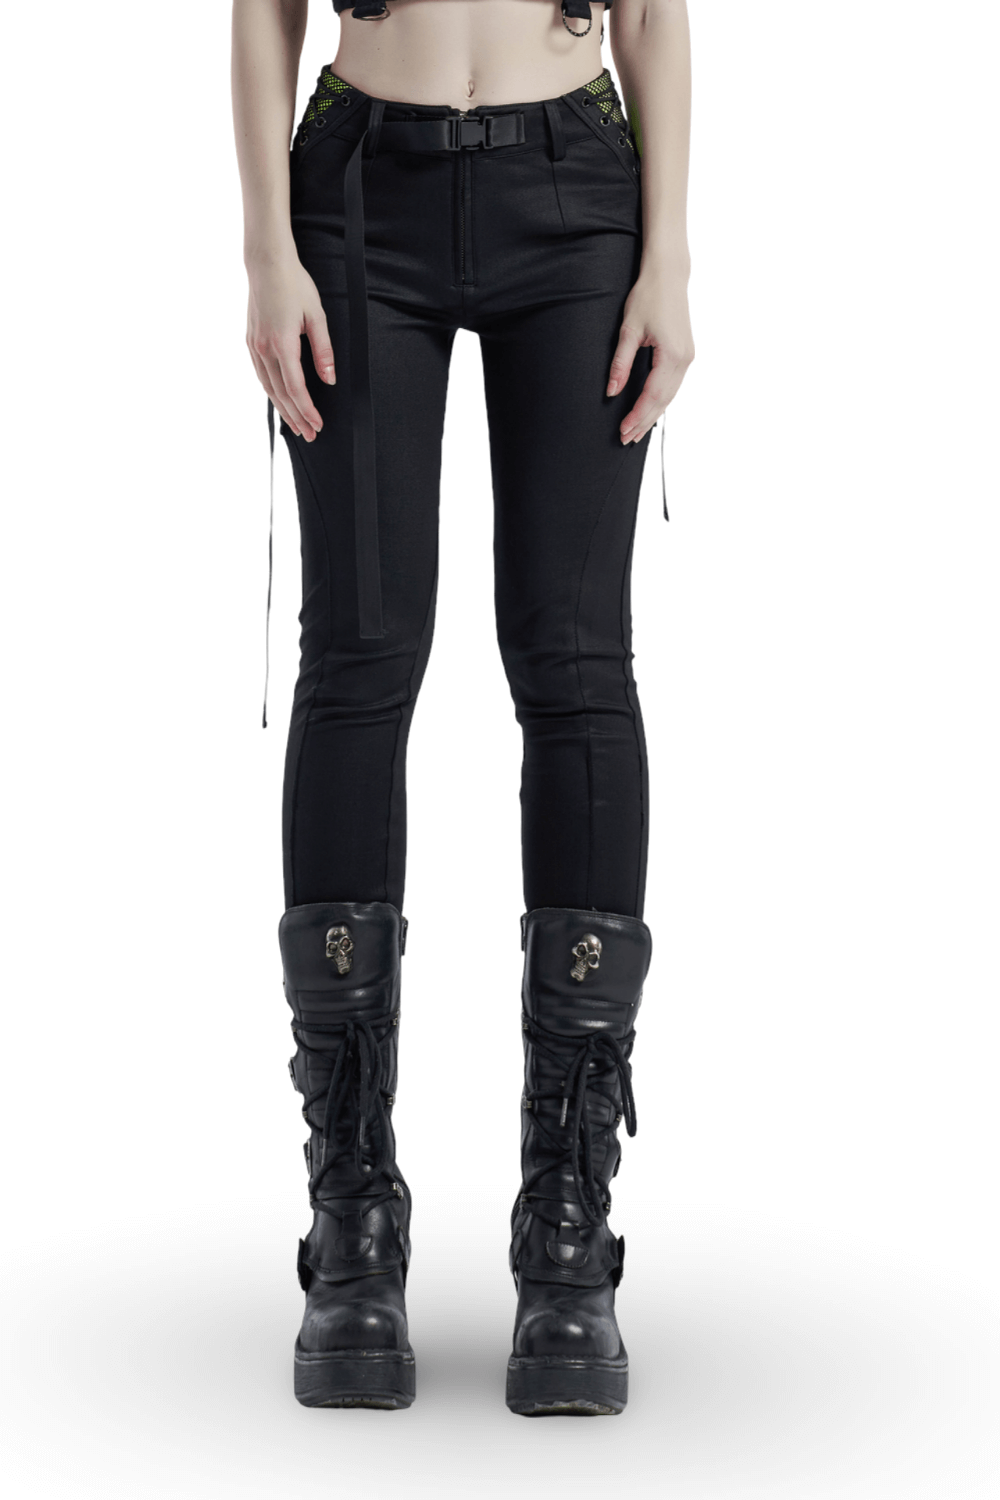 Urban Punk Black Leggings with Zip and Bandage Detail